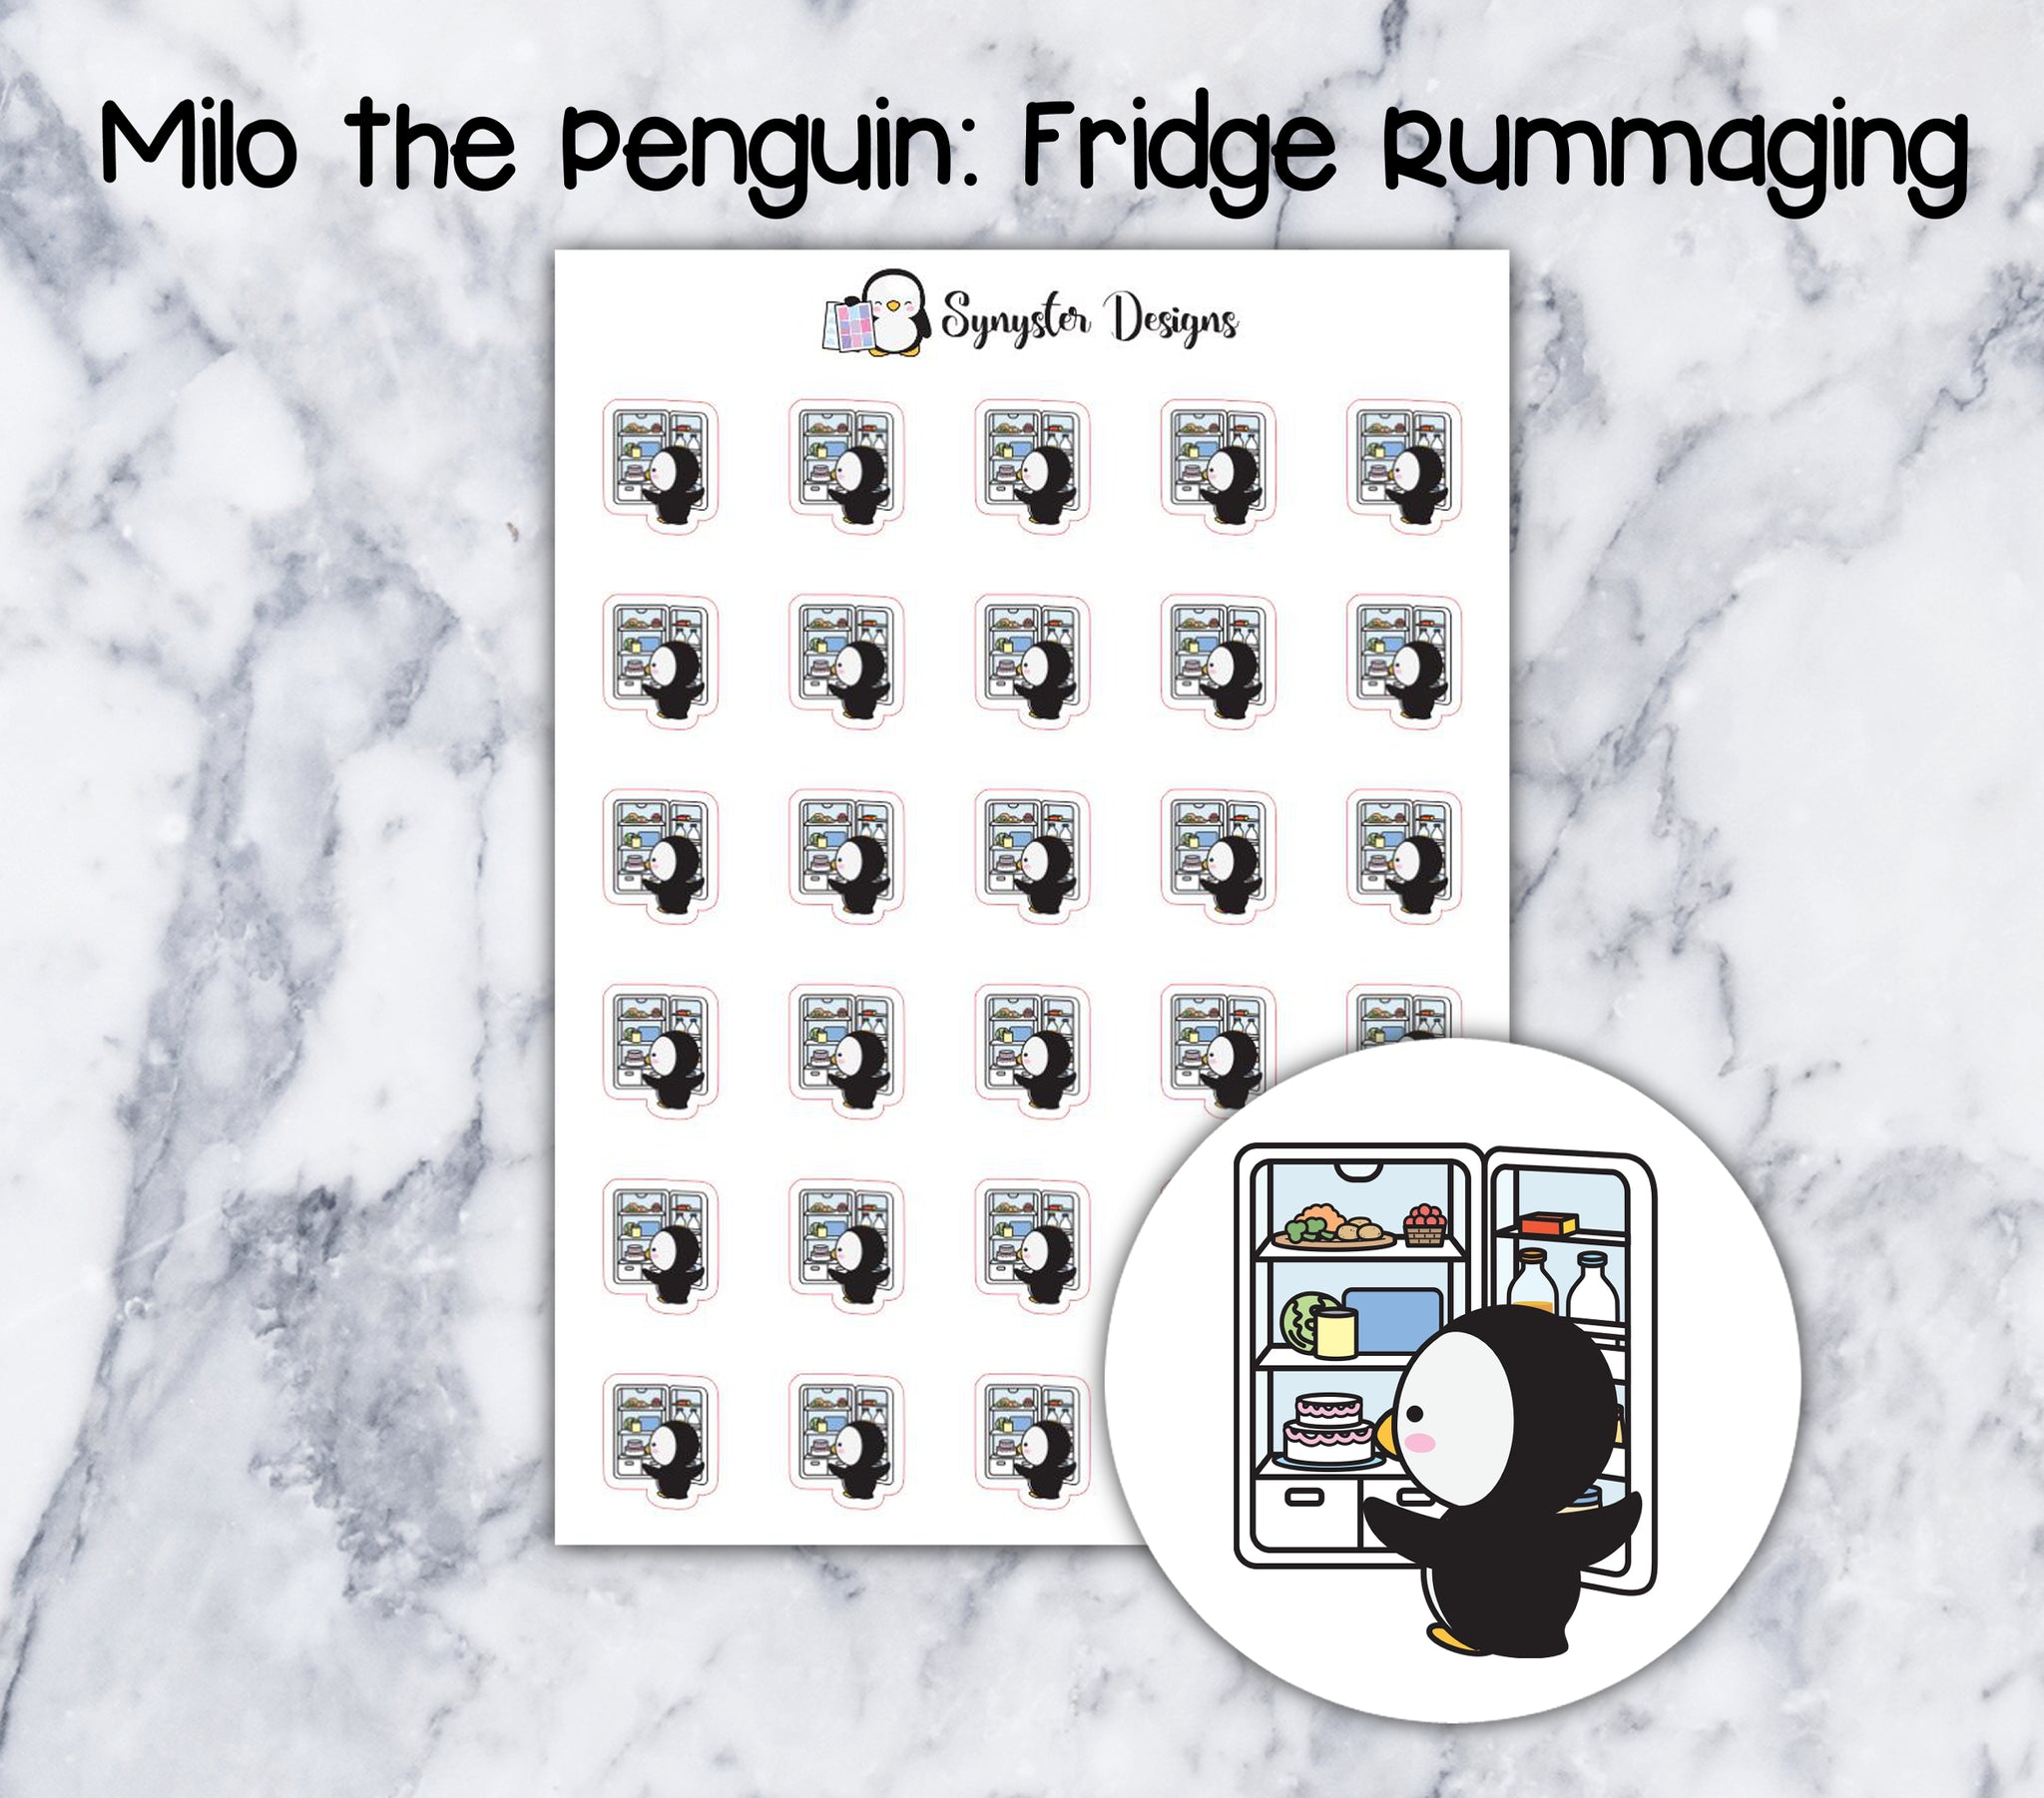 Fridge Rummaging Milo the Penguin